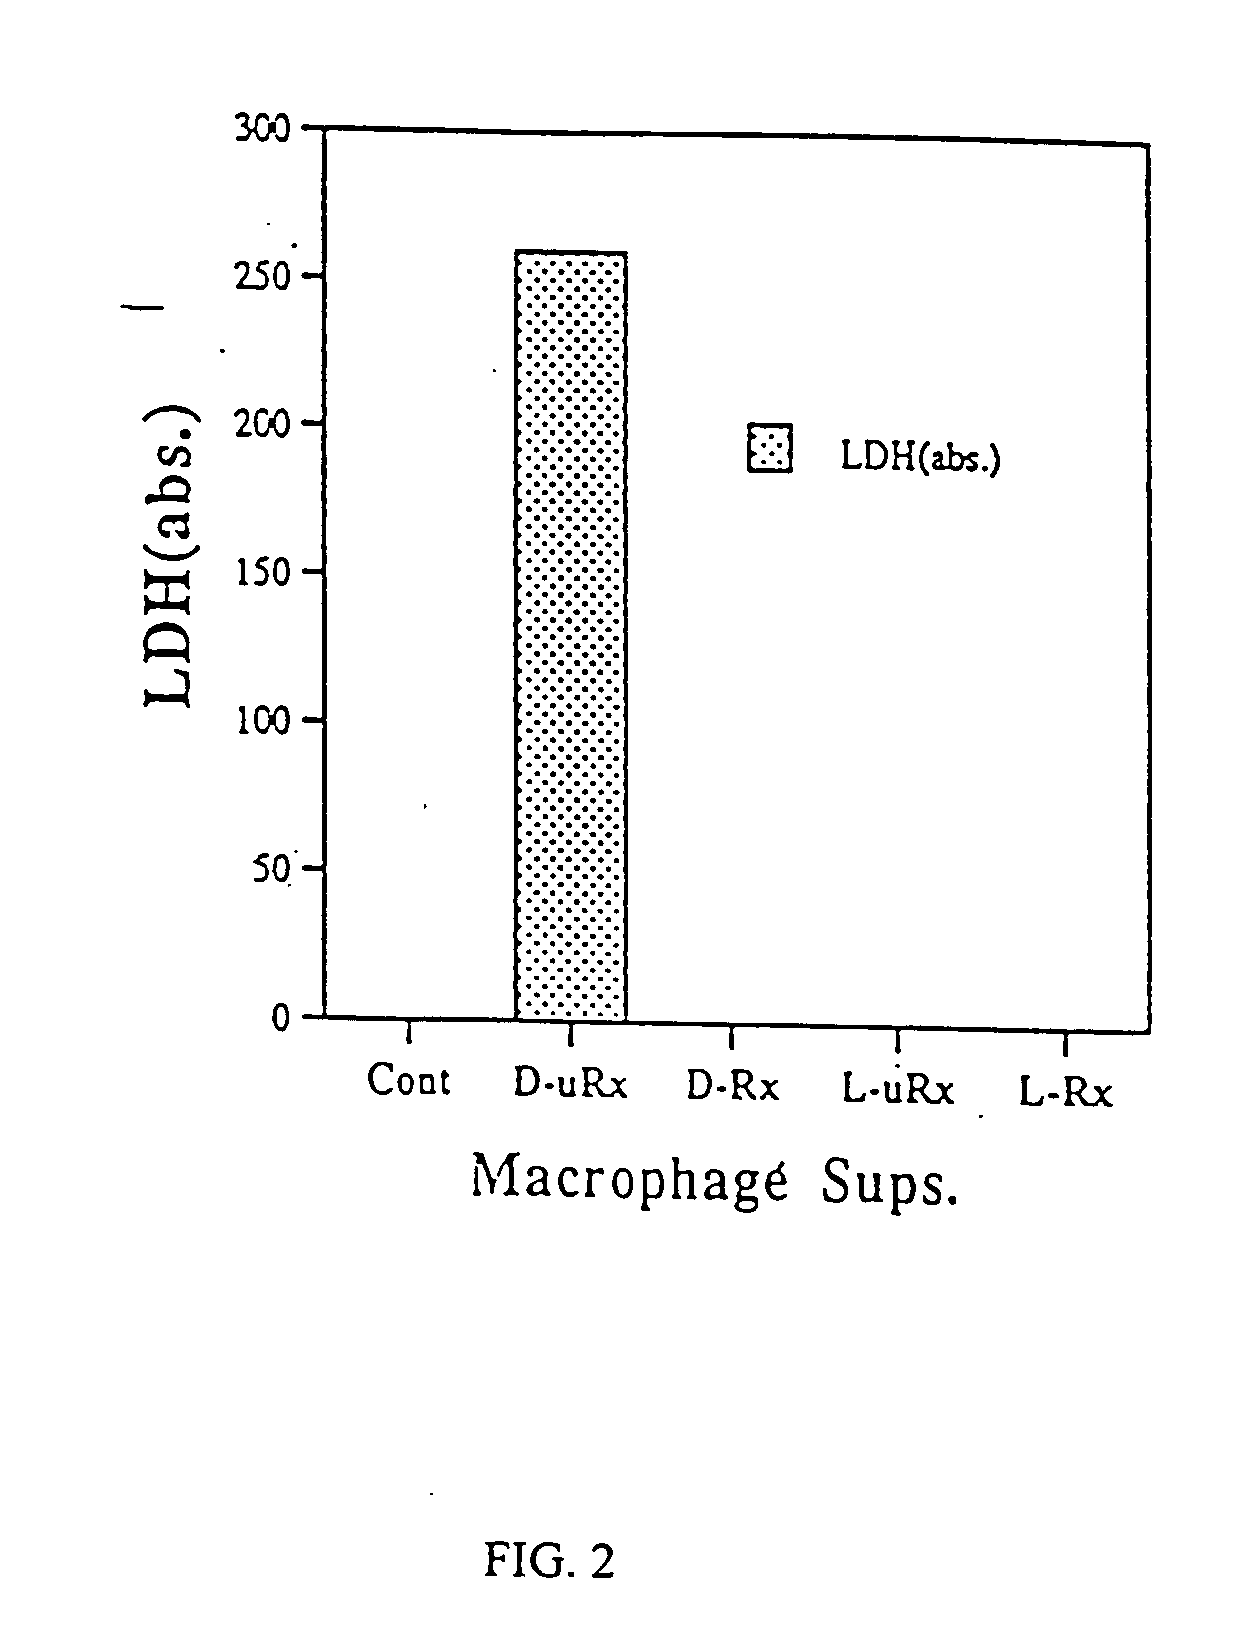 Methods for modulating macrophage proliferation using polyamine analogs